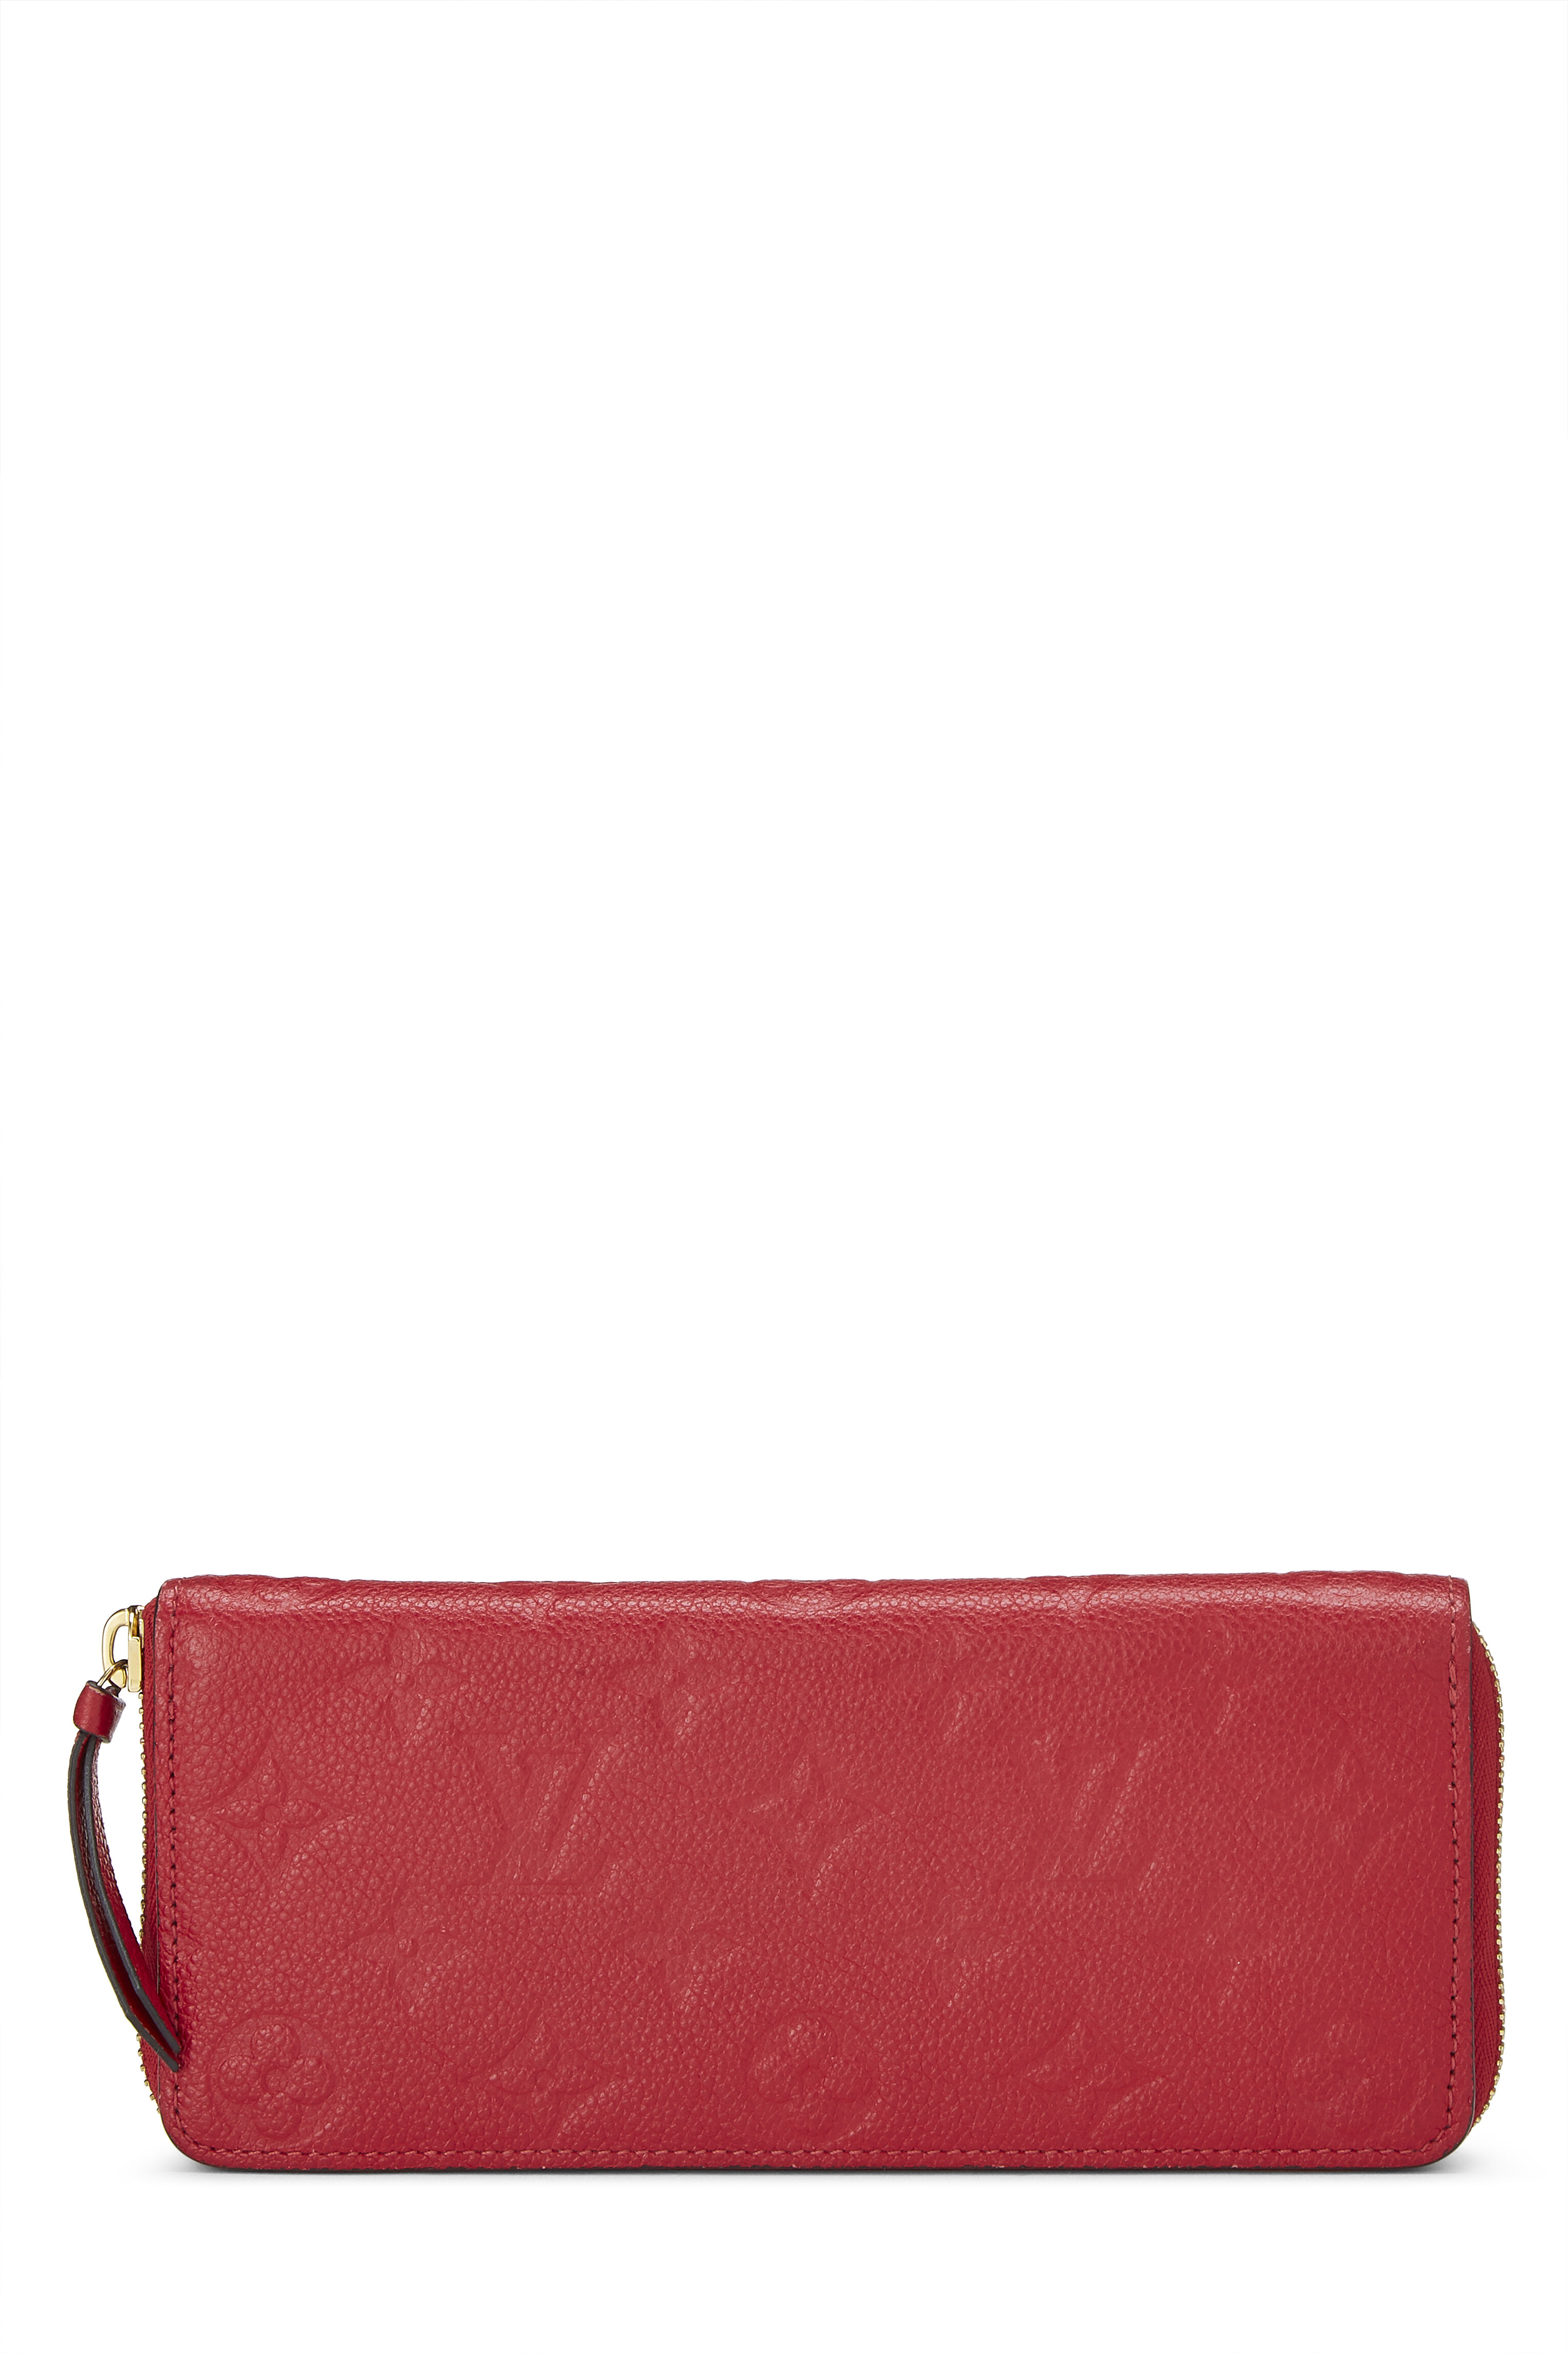 Louis Vuitton Clemence Wallet in Monogram – The Bag Broker